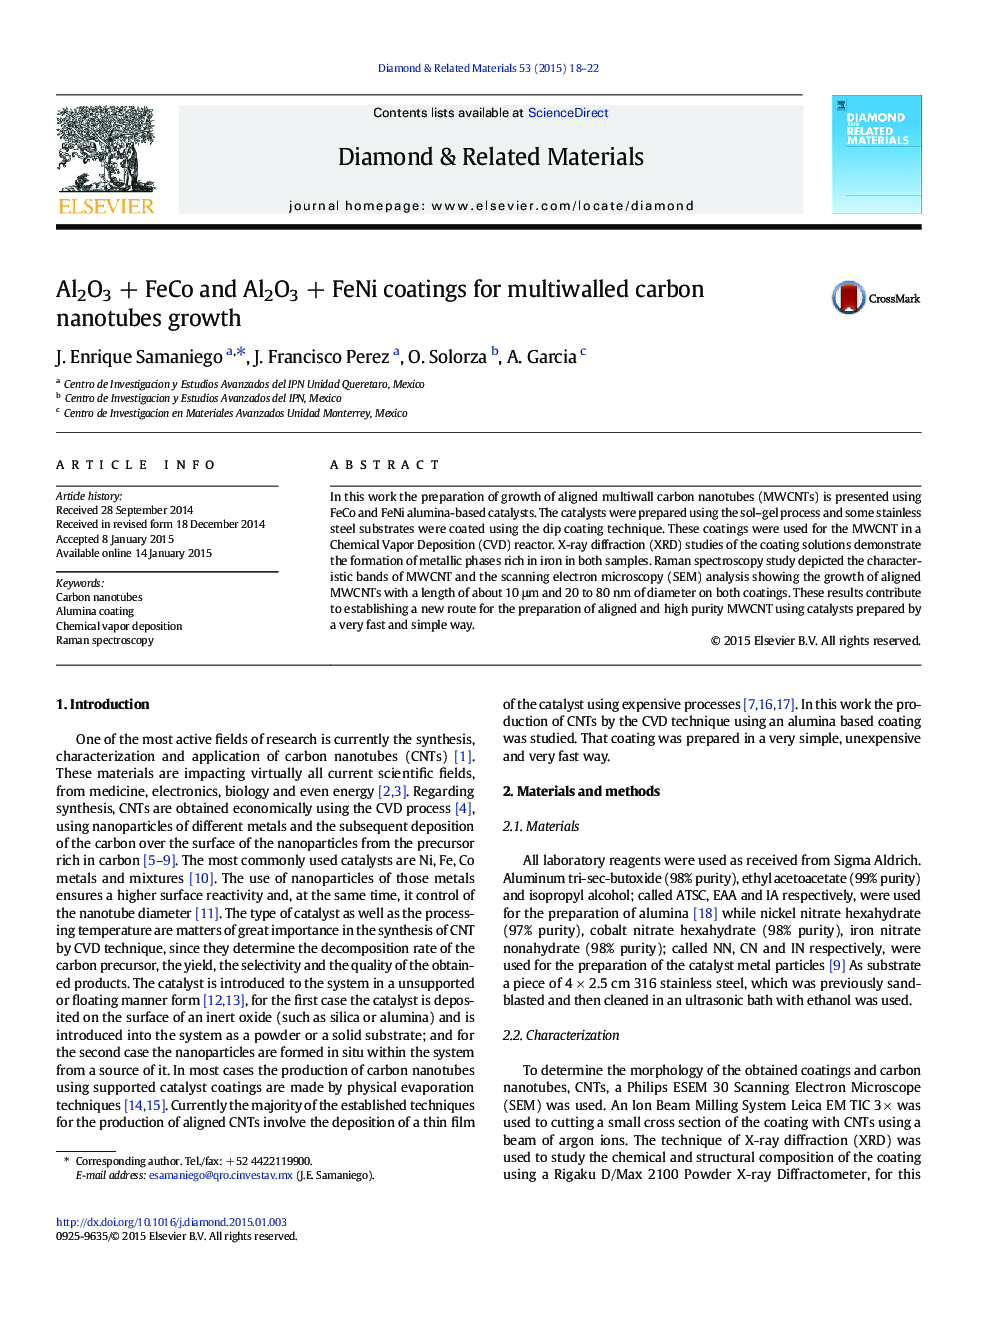 Al2O3 + FeCo and Al2O3 + FeNi coatings for multiwalled carbon nanotubes growth